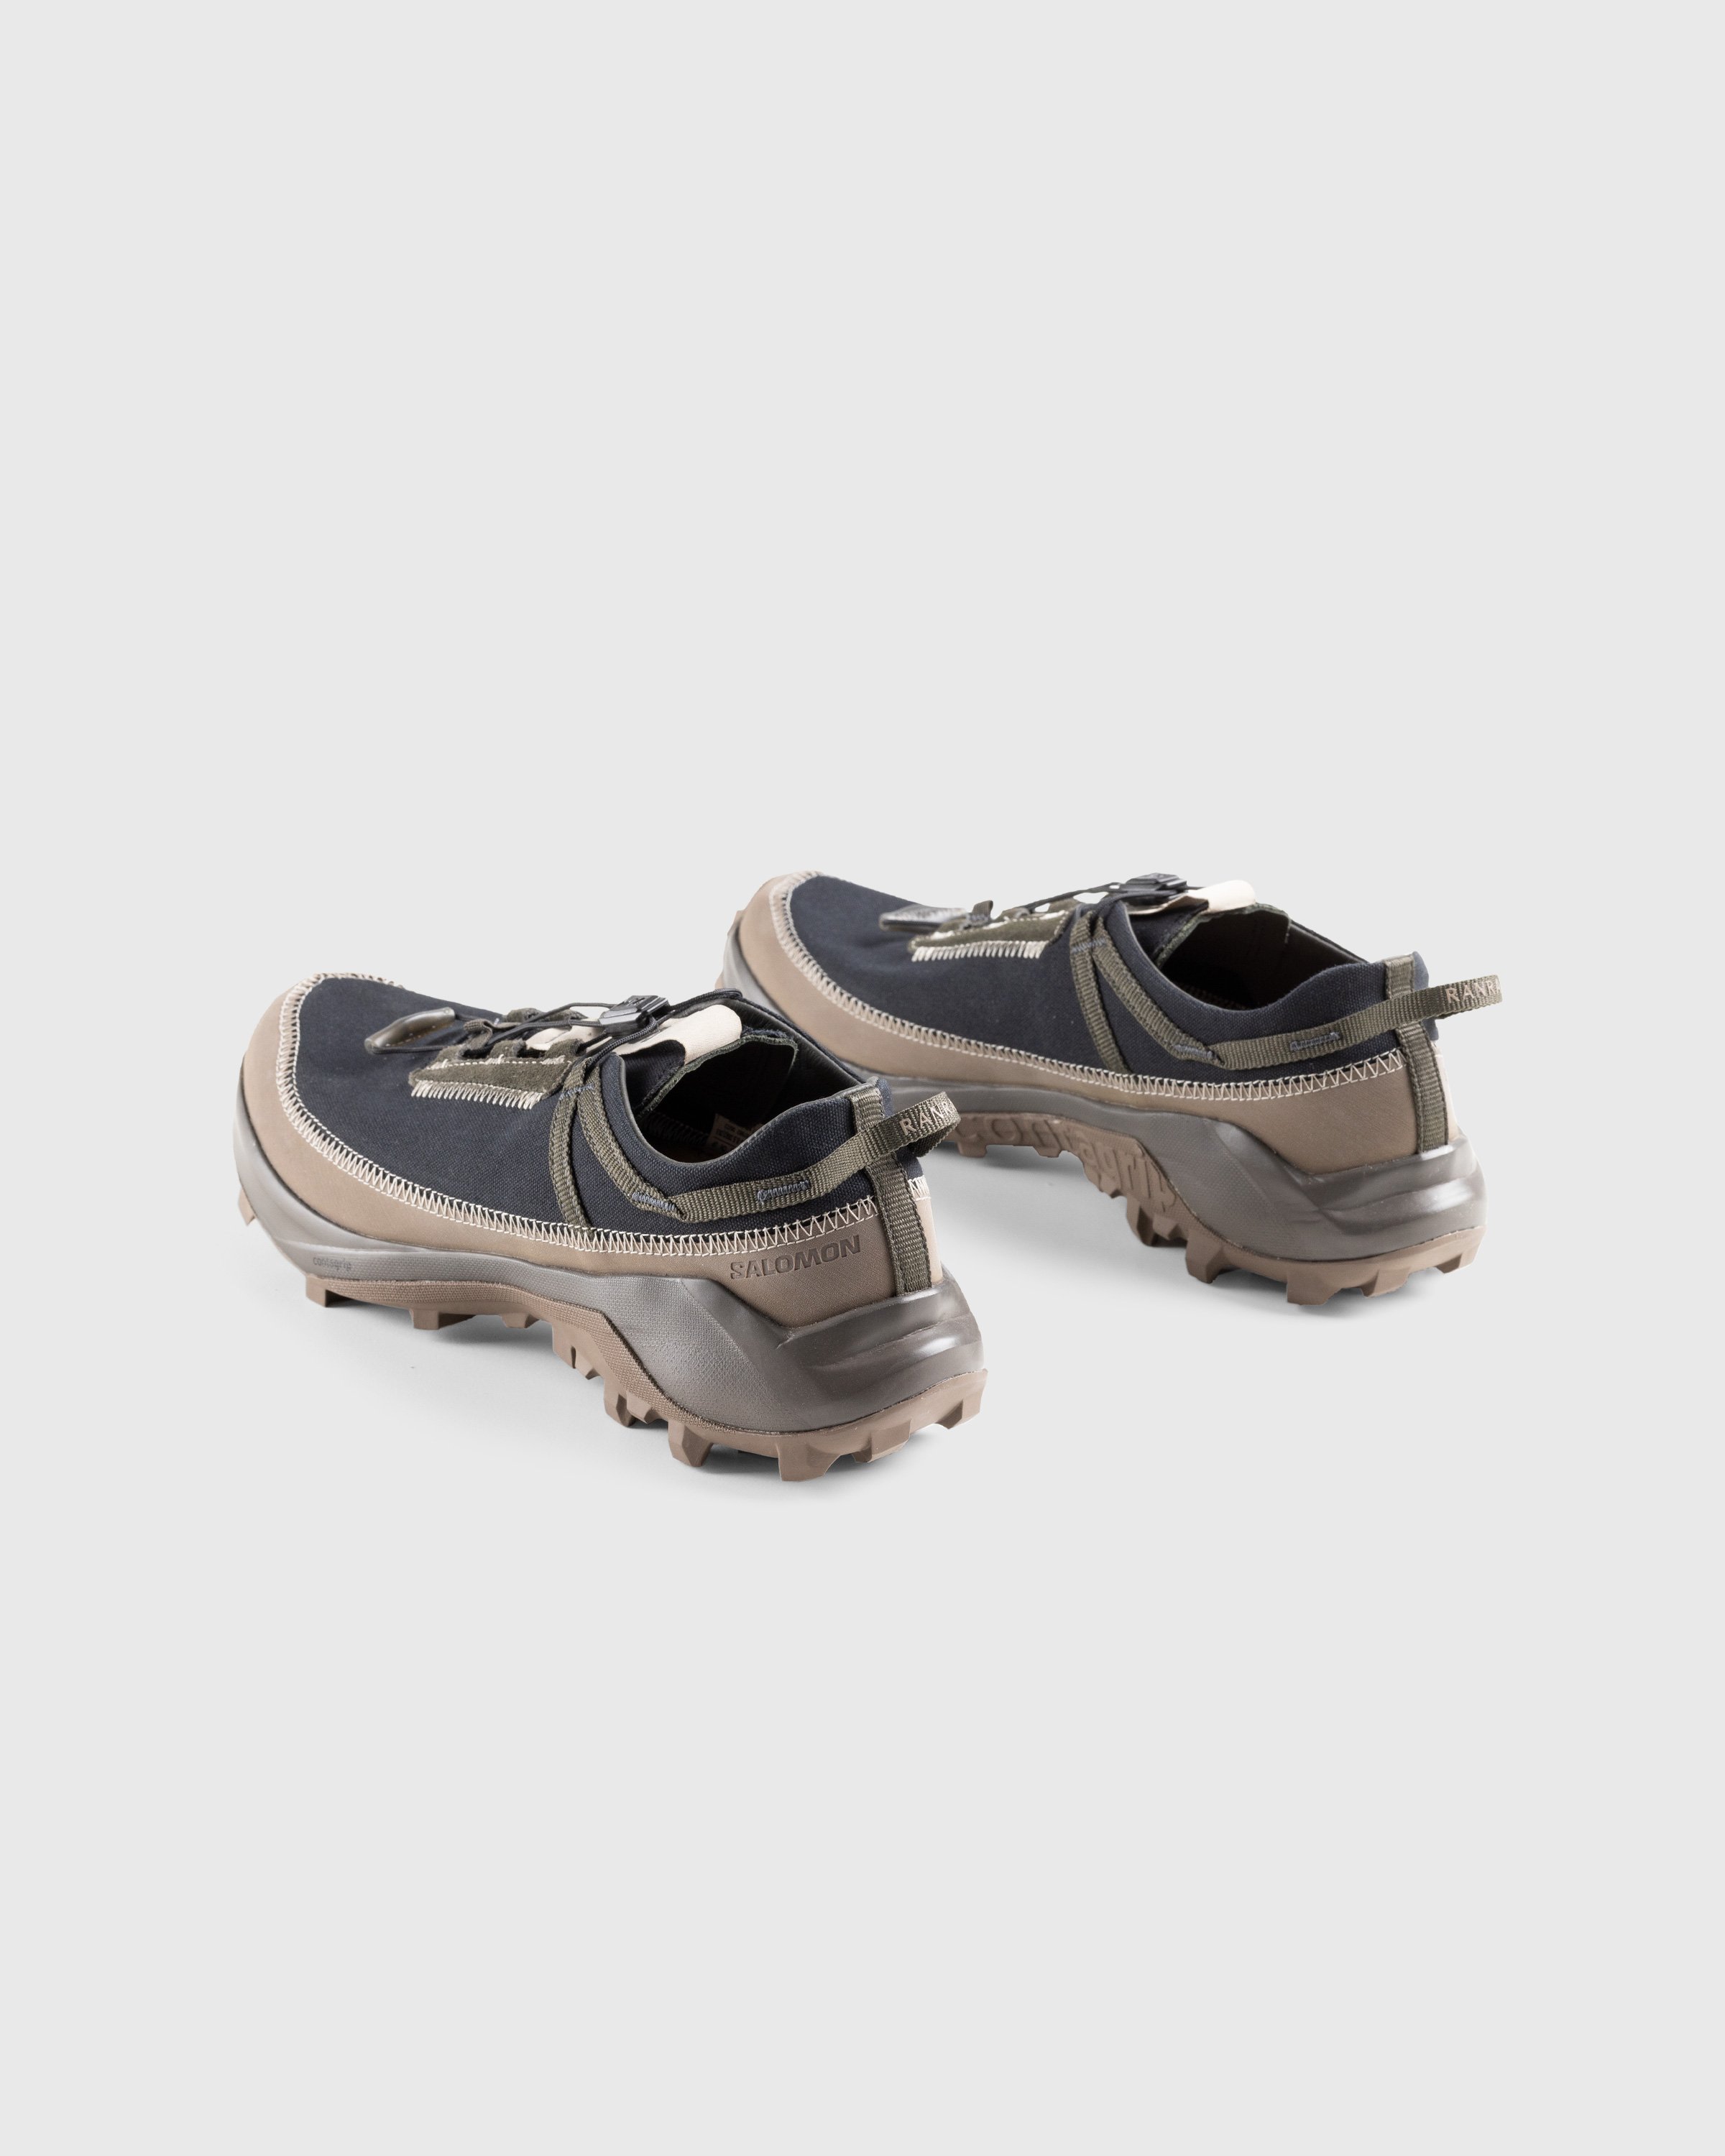 RANRA x Salomon - Cross Pro Peat/Major - Footwear - Black - Image 4